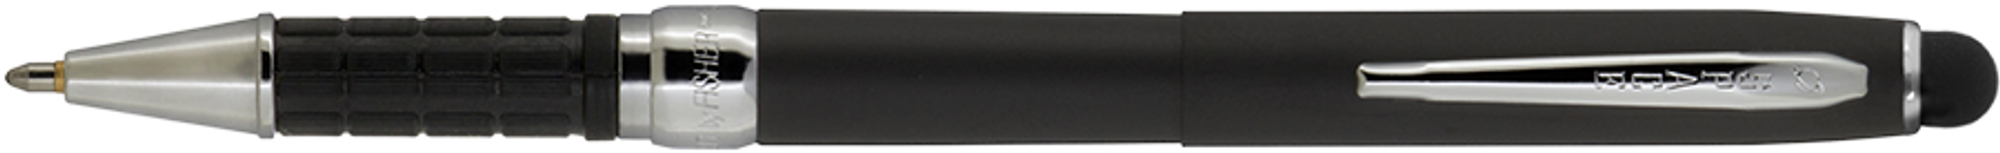 Fisher Space Pen X-750 w/ Stylus Black Body